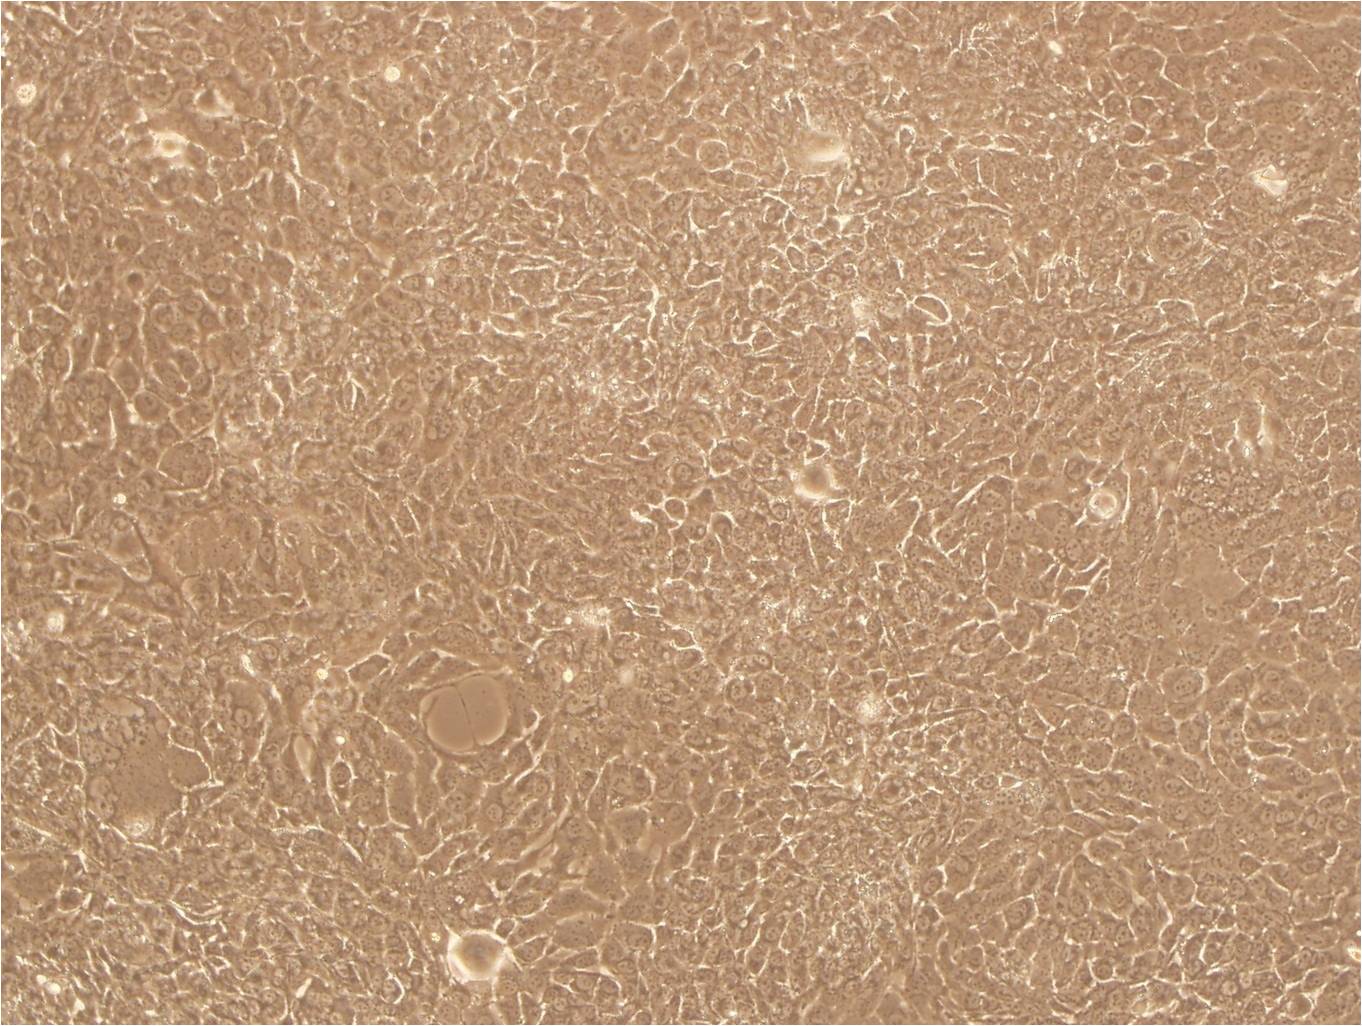 KOSC-2 Cells(赠送Str鉴定报告)|人口腔鳞状癌细胞,KOSC-2 Cells